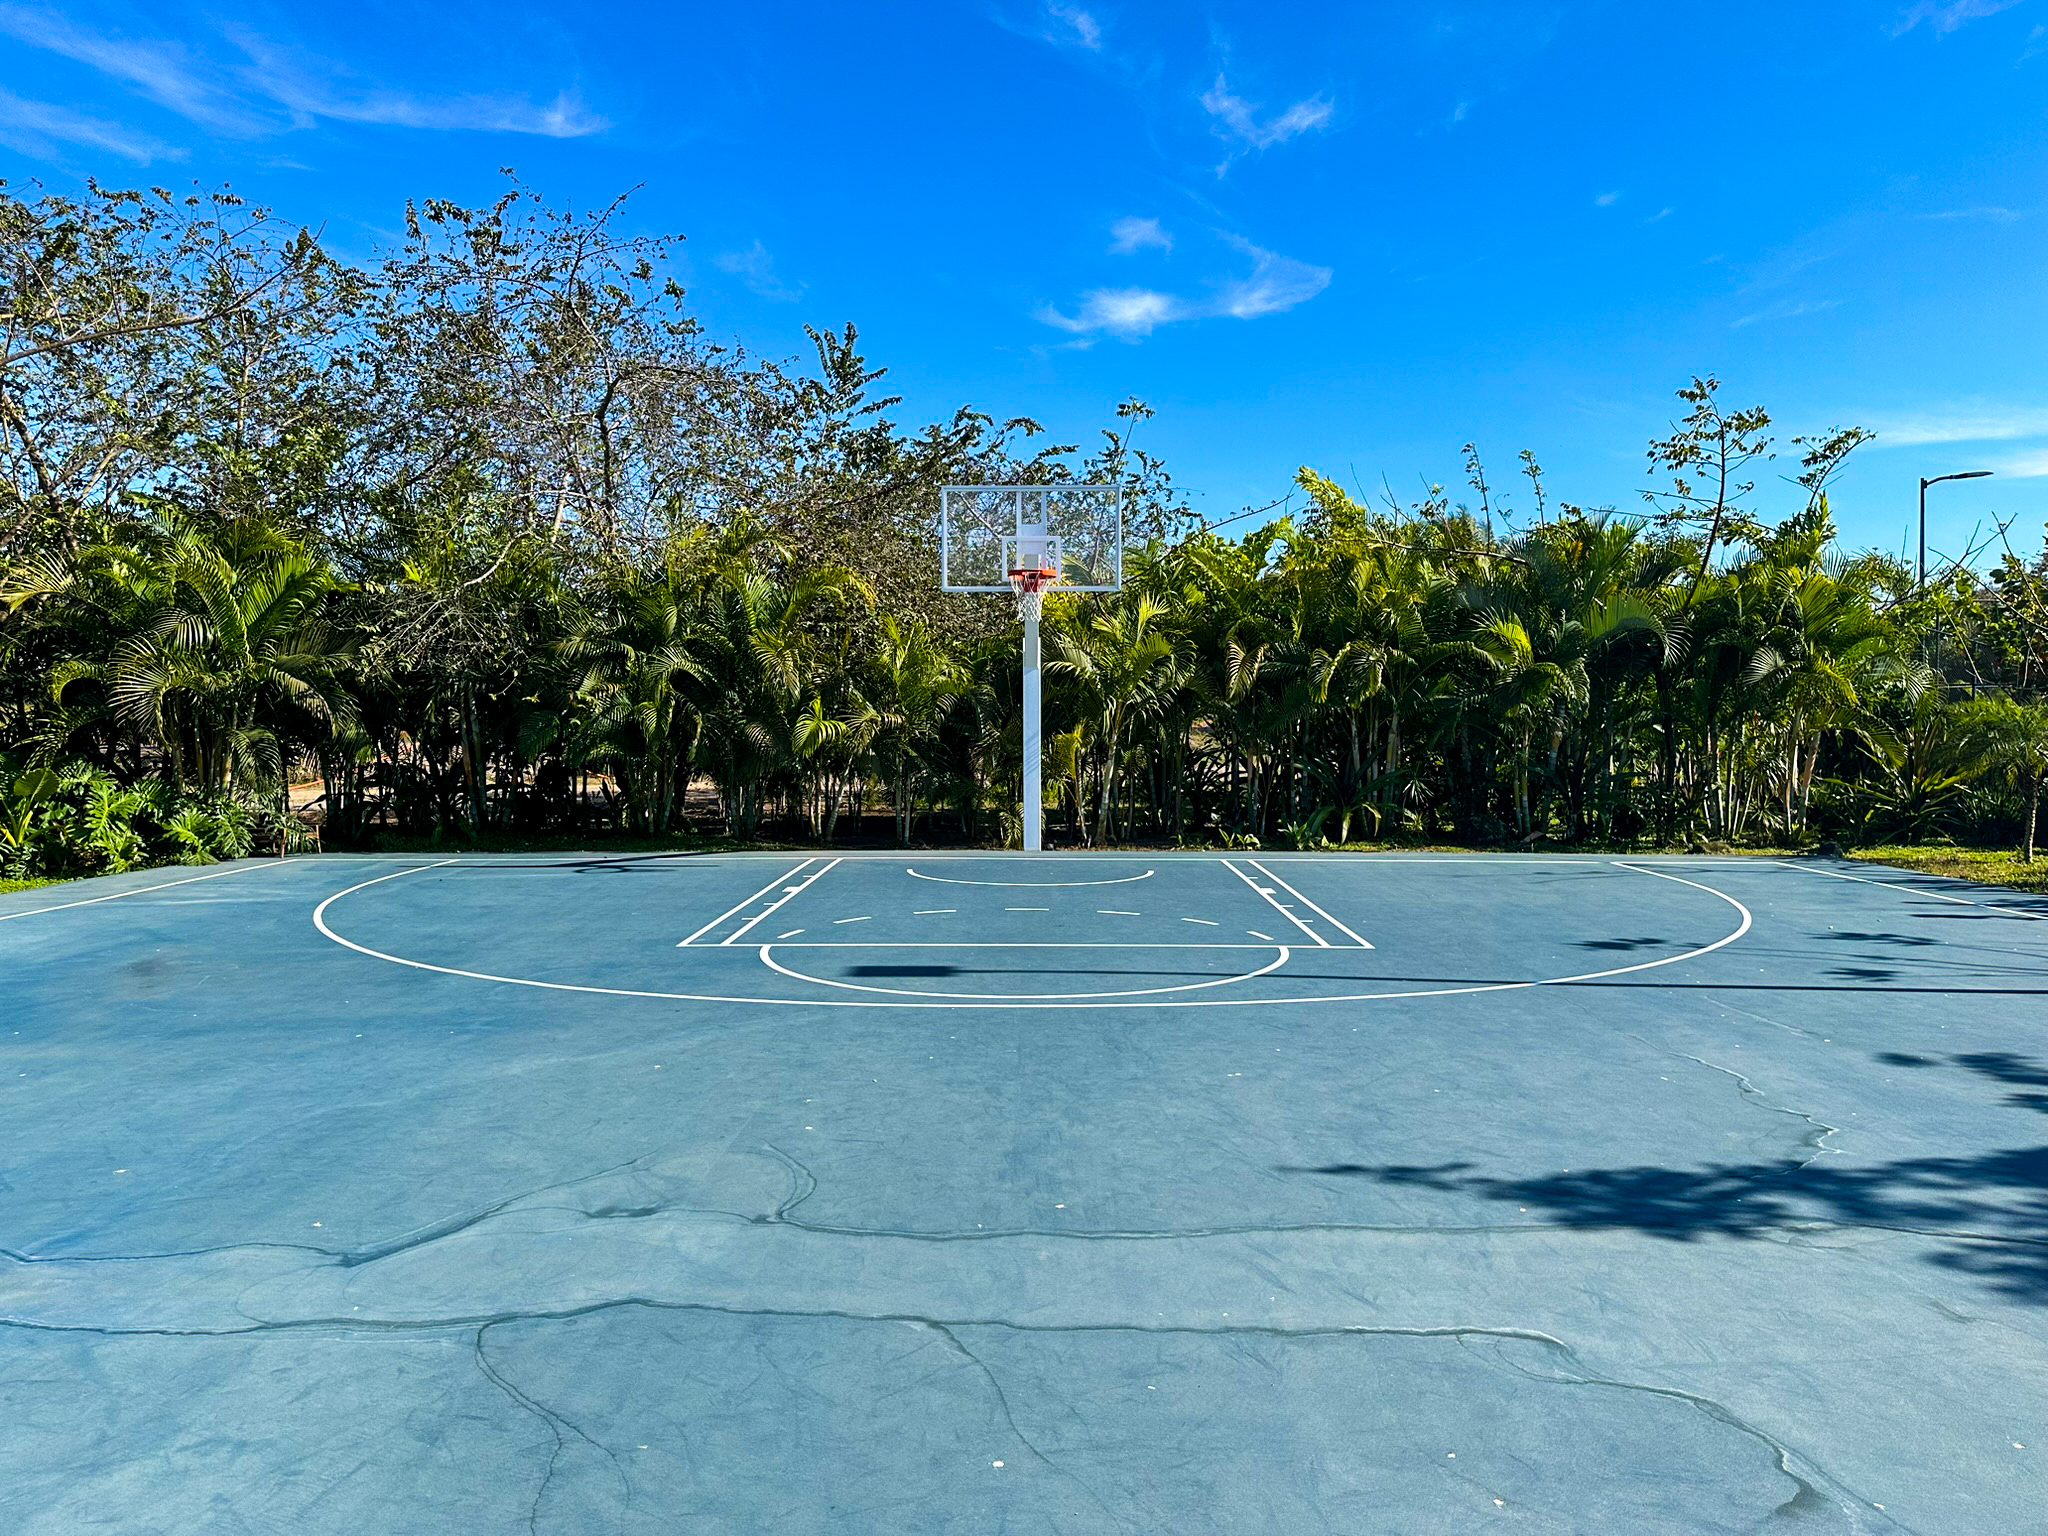 Mandarina basketball court